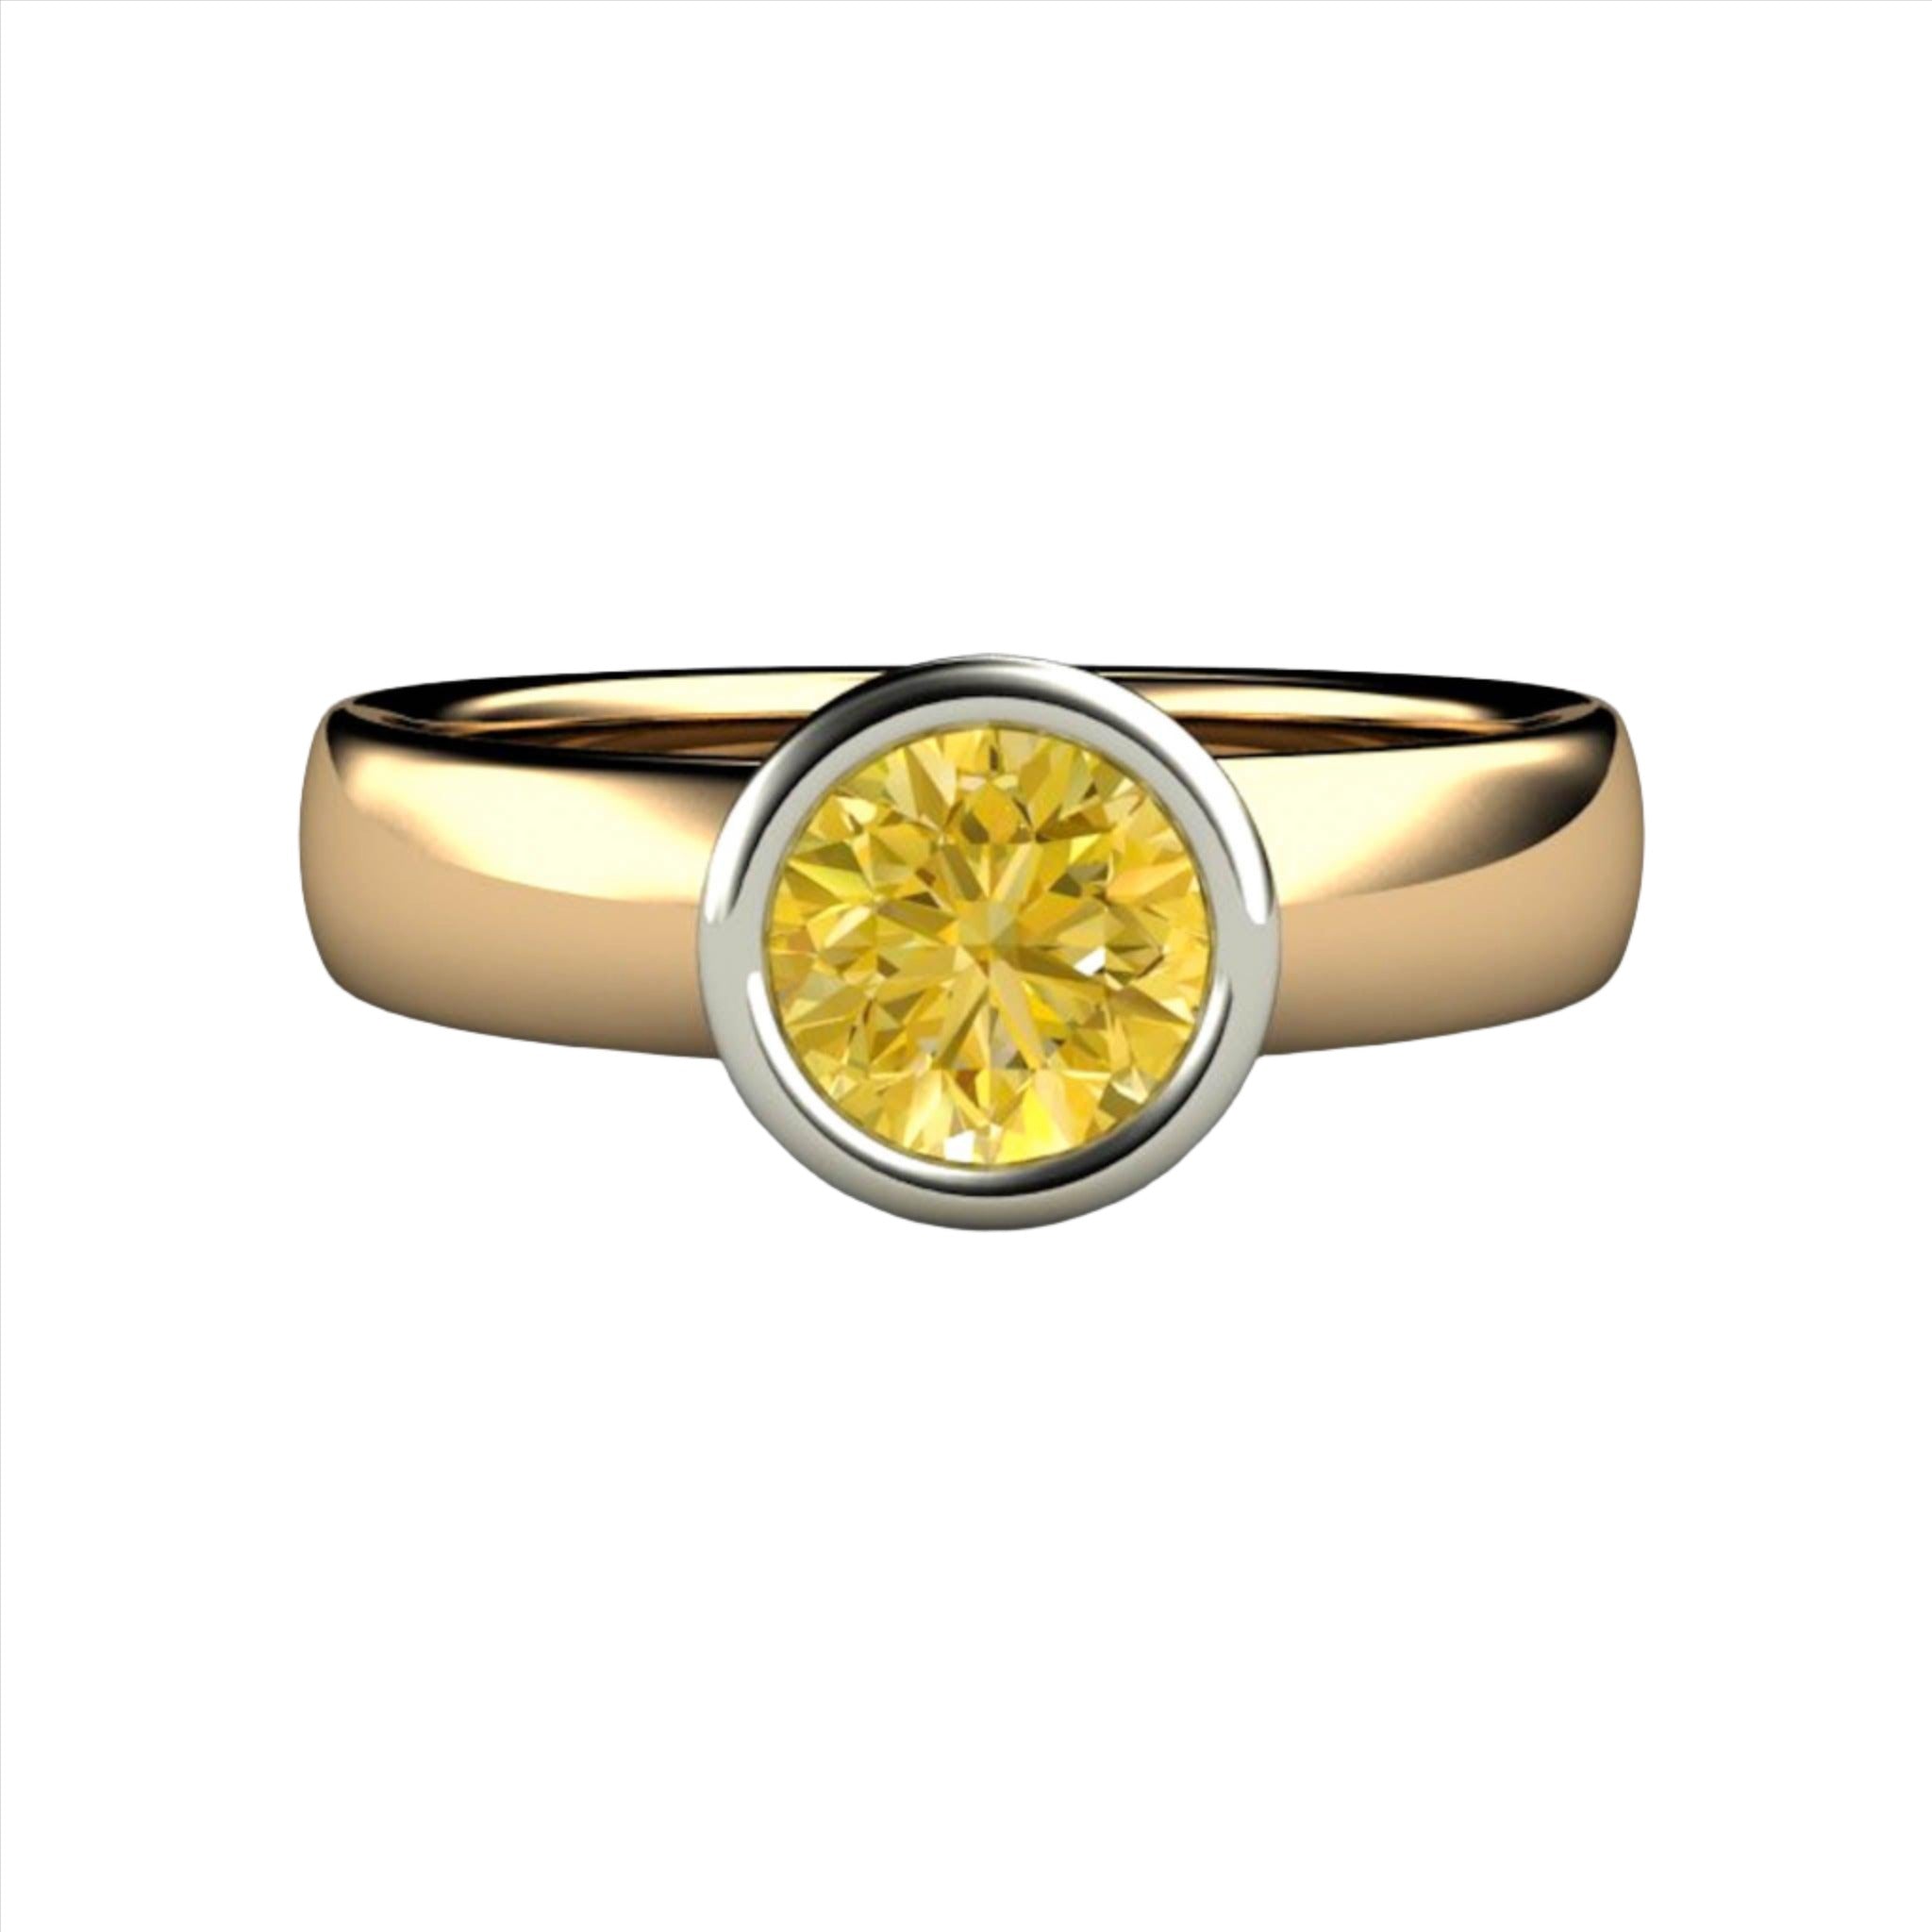 Astrology Natural Sri Lankan Yellow Sapphire Octagon Cut in 18K Yellow Gold  Ring, 3 Grams, Carat: 1.75 Ct at Rs 25000 in Mumbai